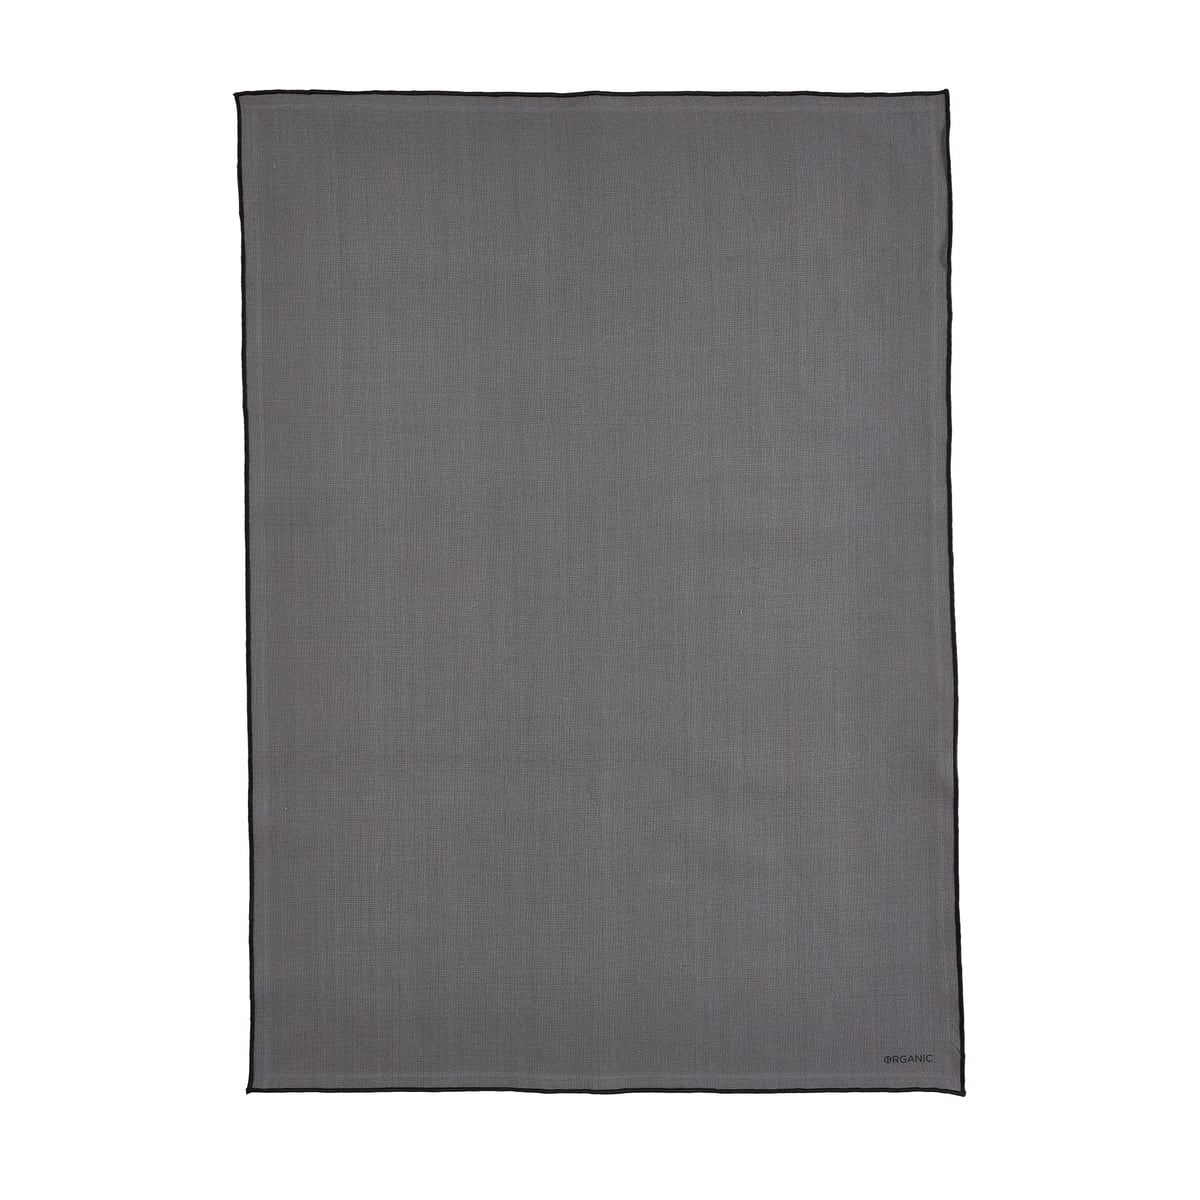 södahl - organic torchon, 55 x 80 cm, gris / noir